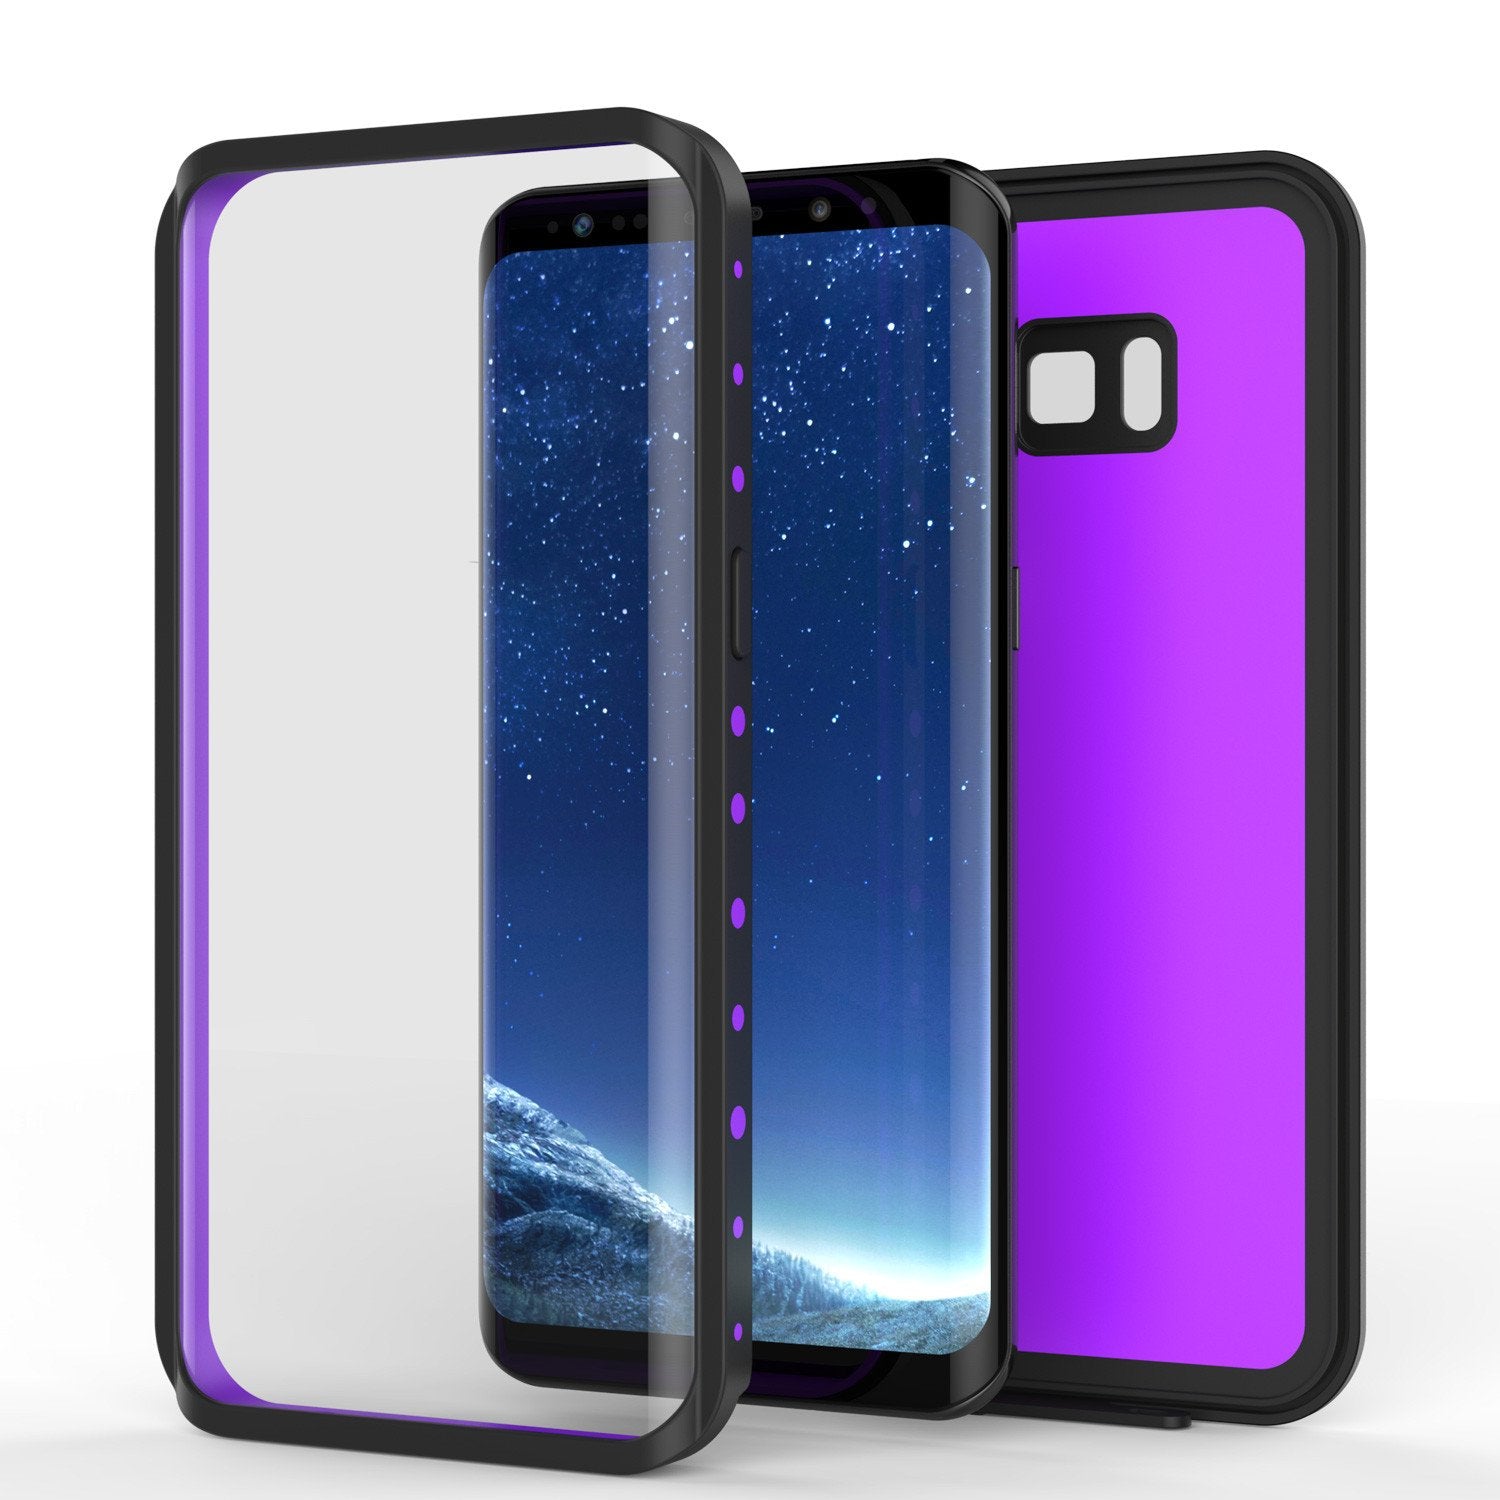 Galaxy S8 Plus Case, Punkcase [StudStar Series] [Slim Fit], Purple